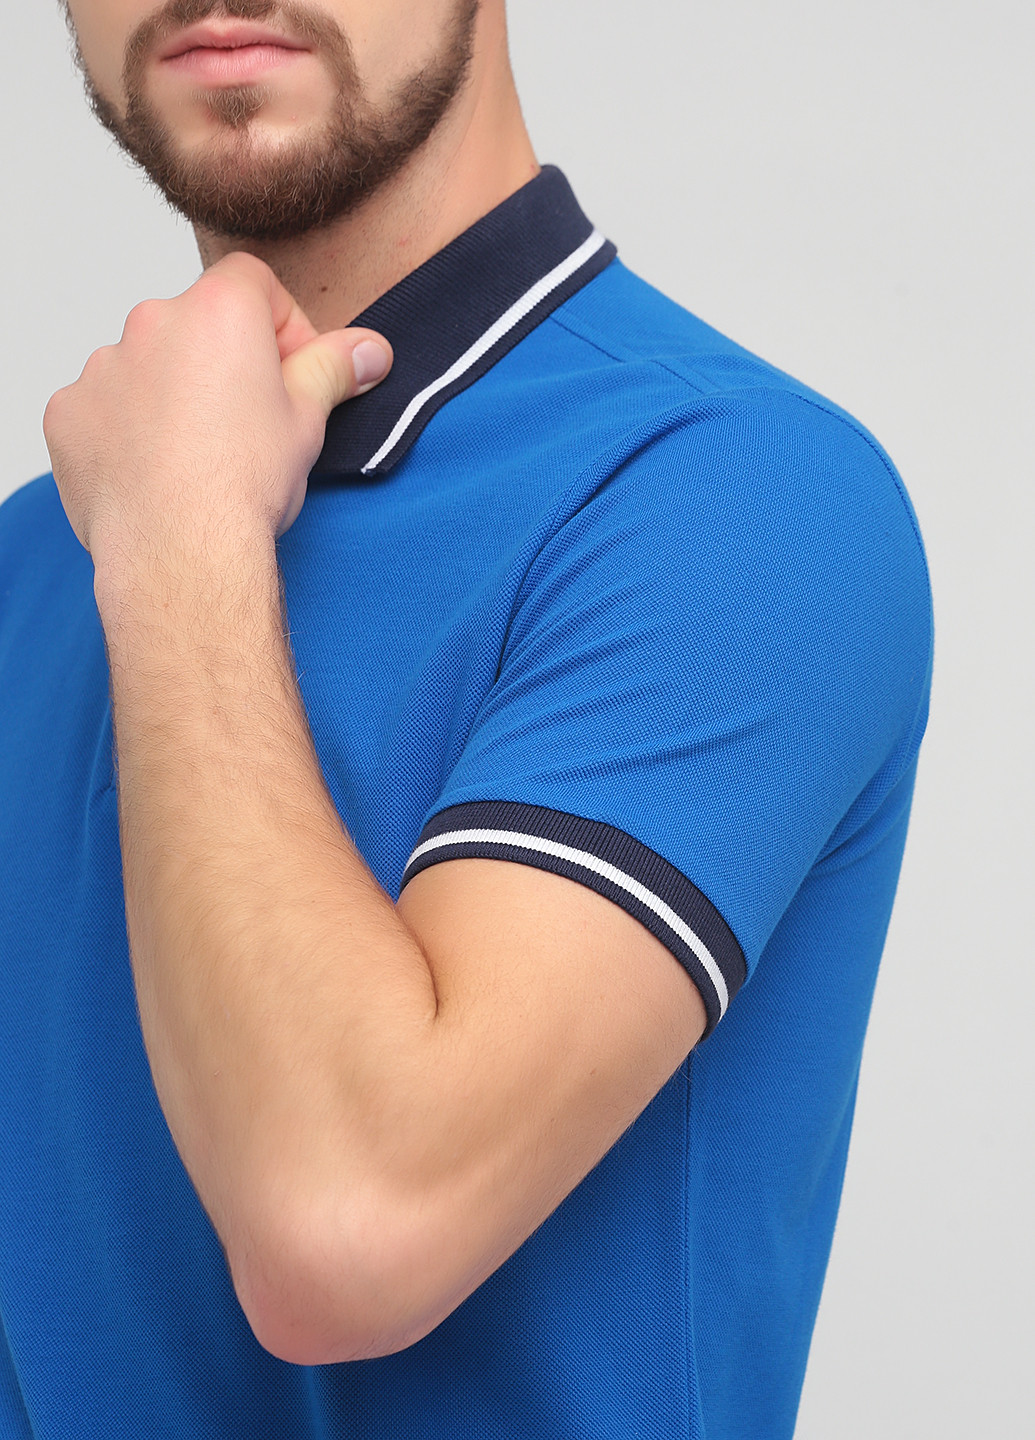 Светло-синяя футболка-поло для мужчин Ellesse однотонная